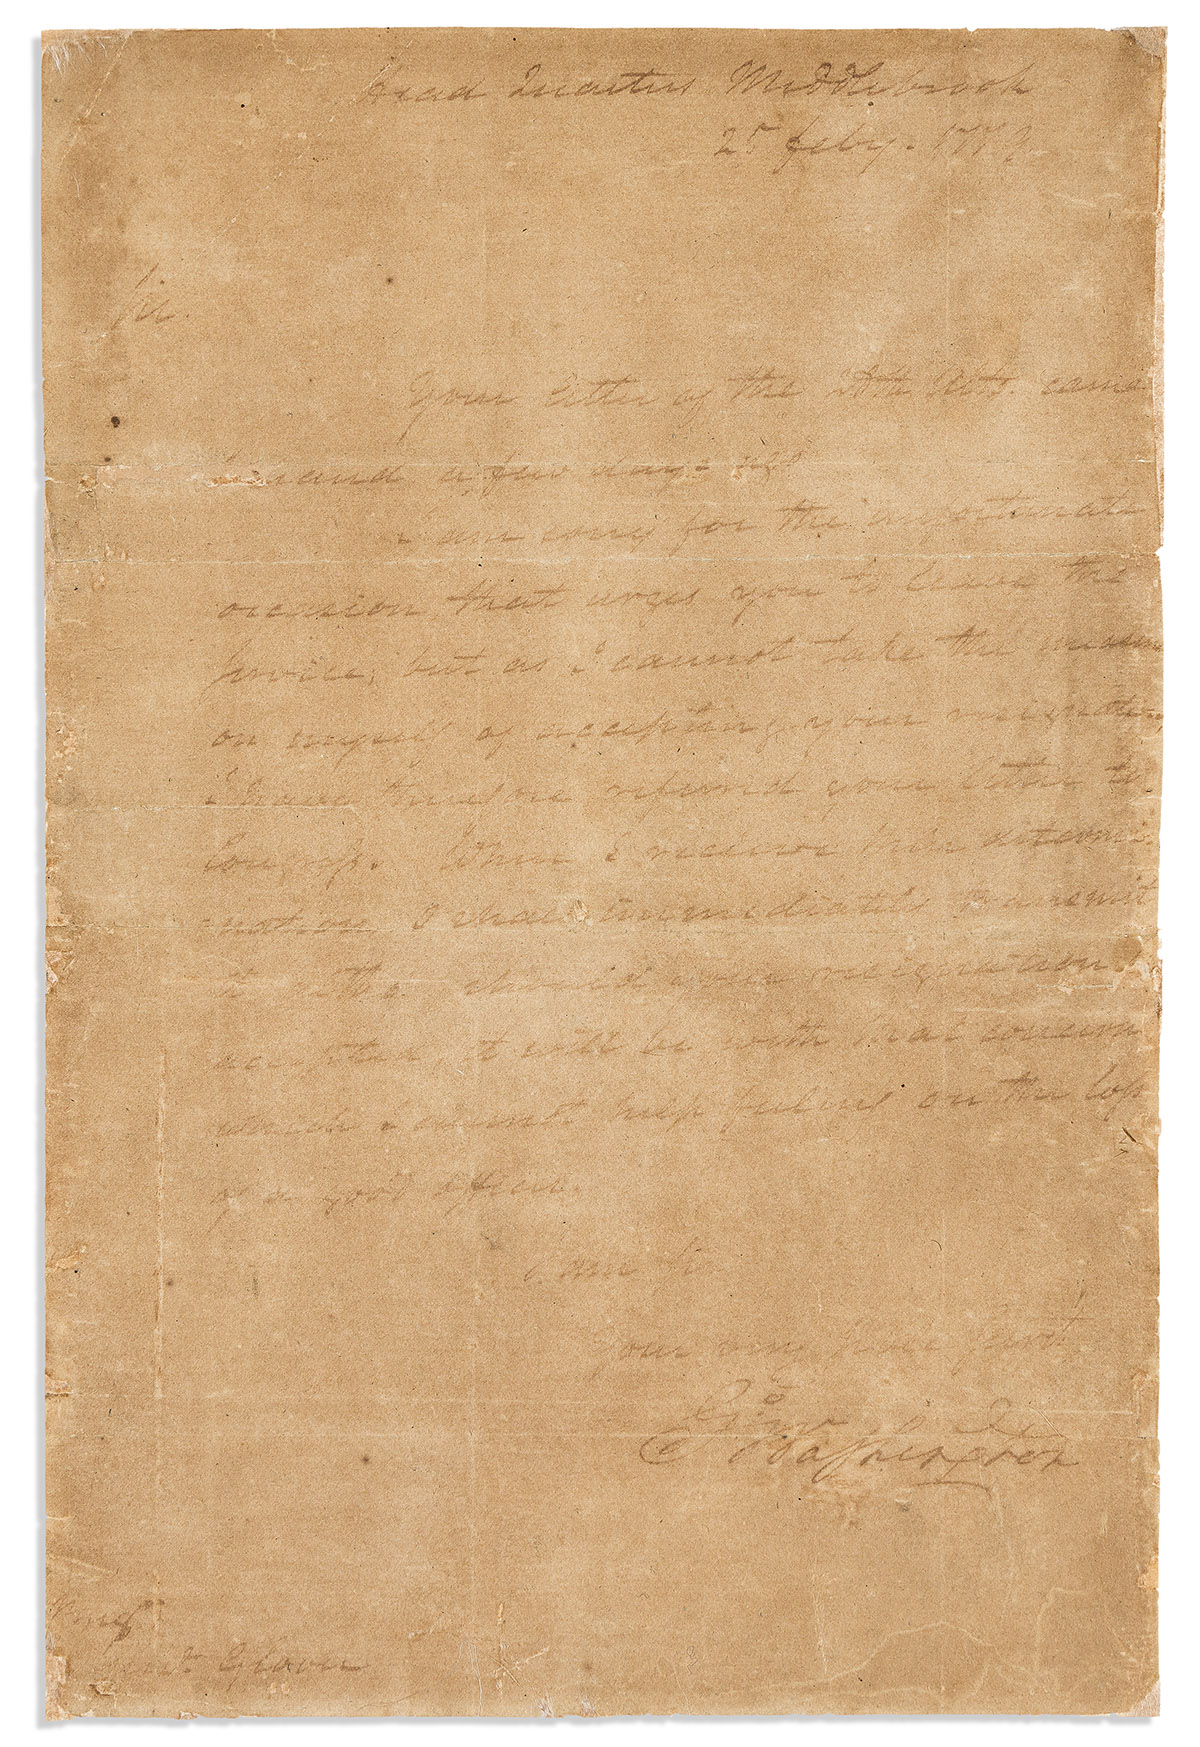 (AMERICAN REVOLUTION.) WASHINGTON, GEORGE. Letter Signed, G:Washington, to General John Glover,